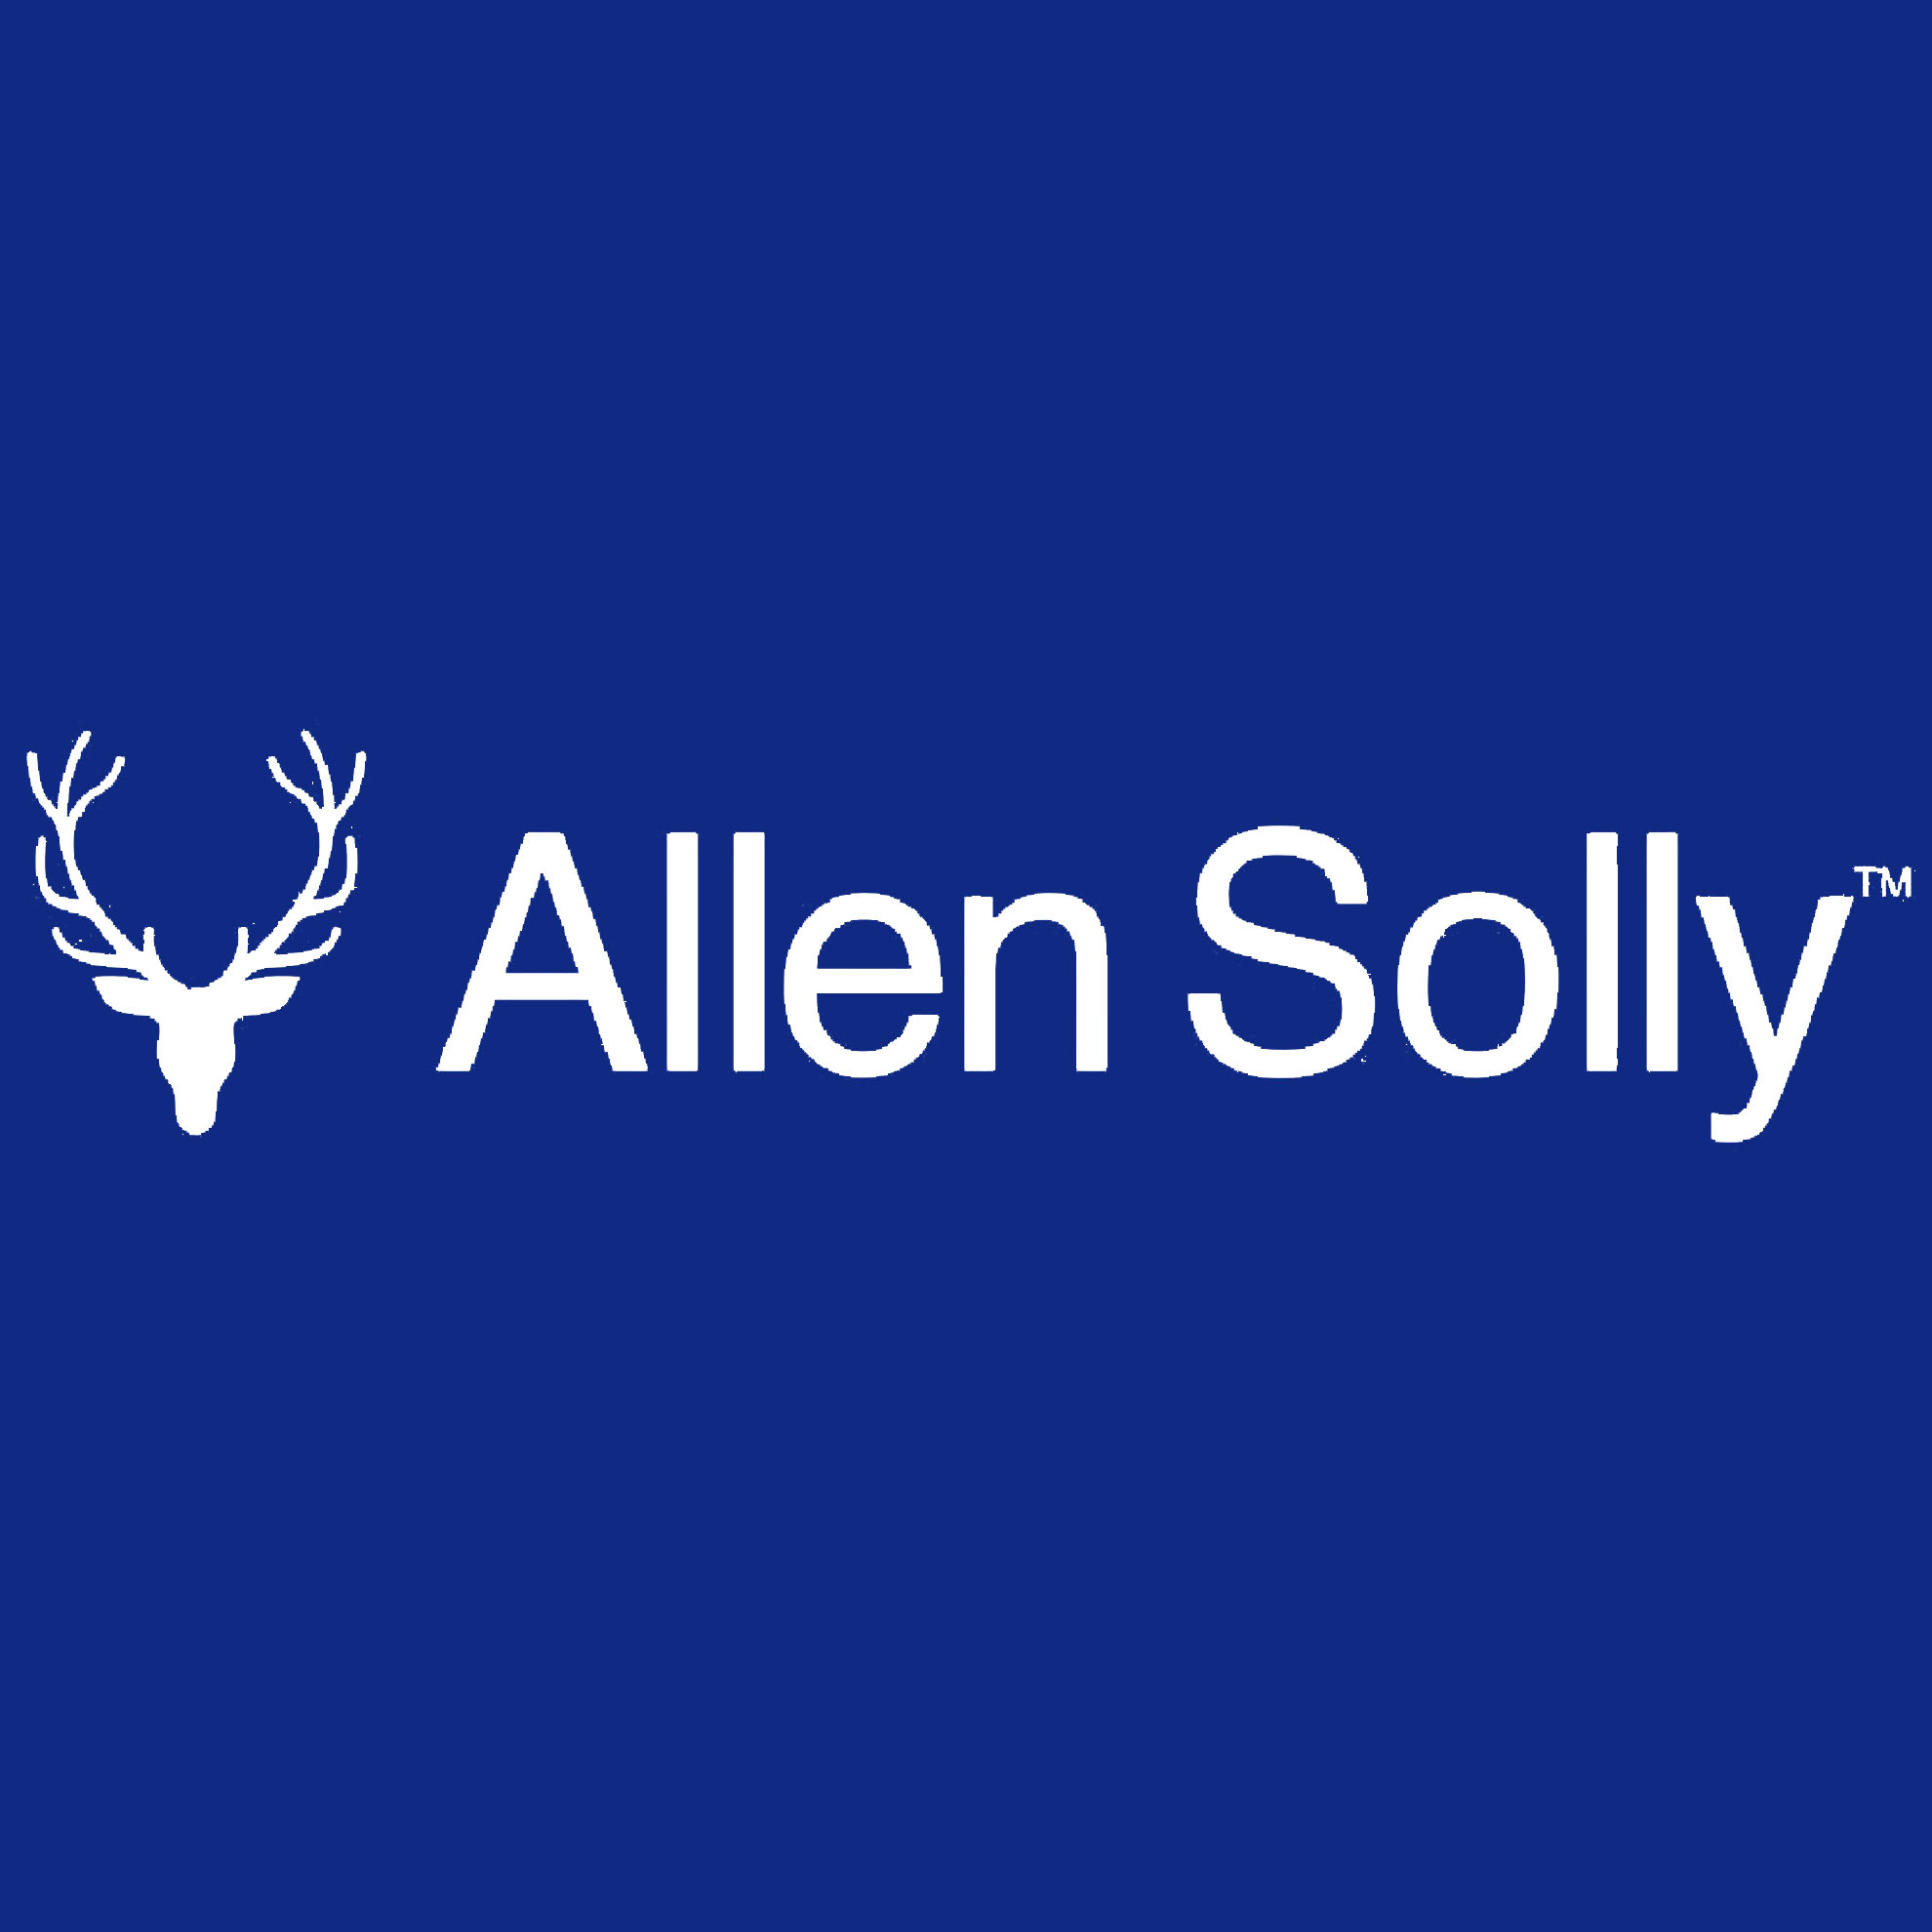 Allen Solly - The Marina Mall